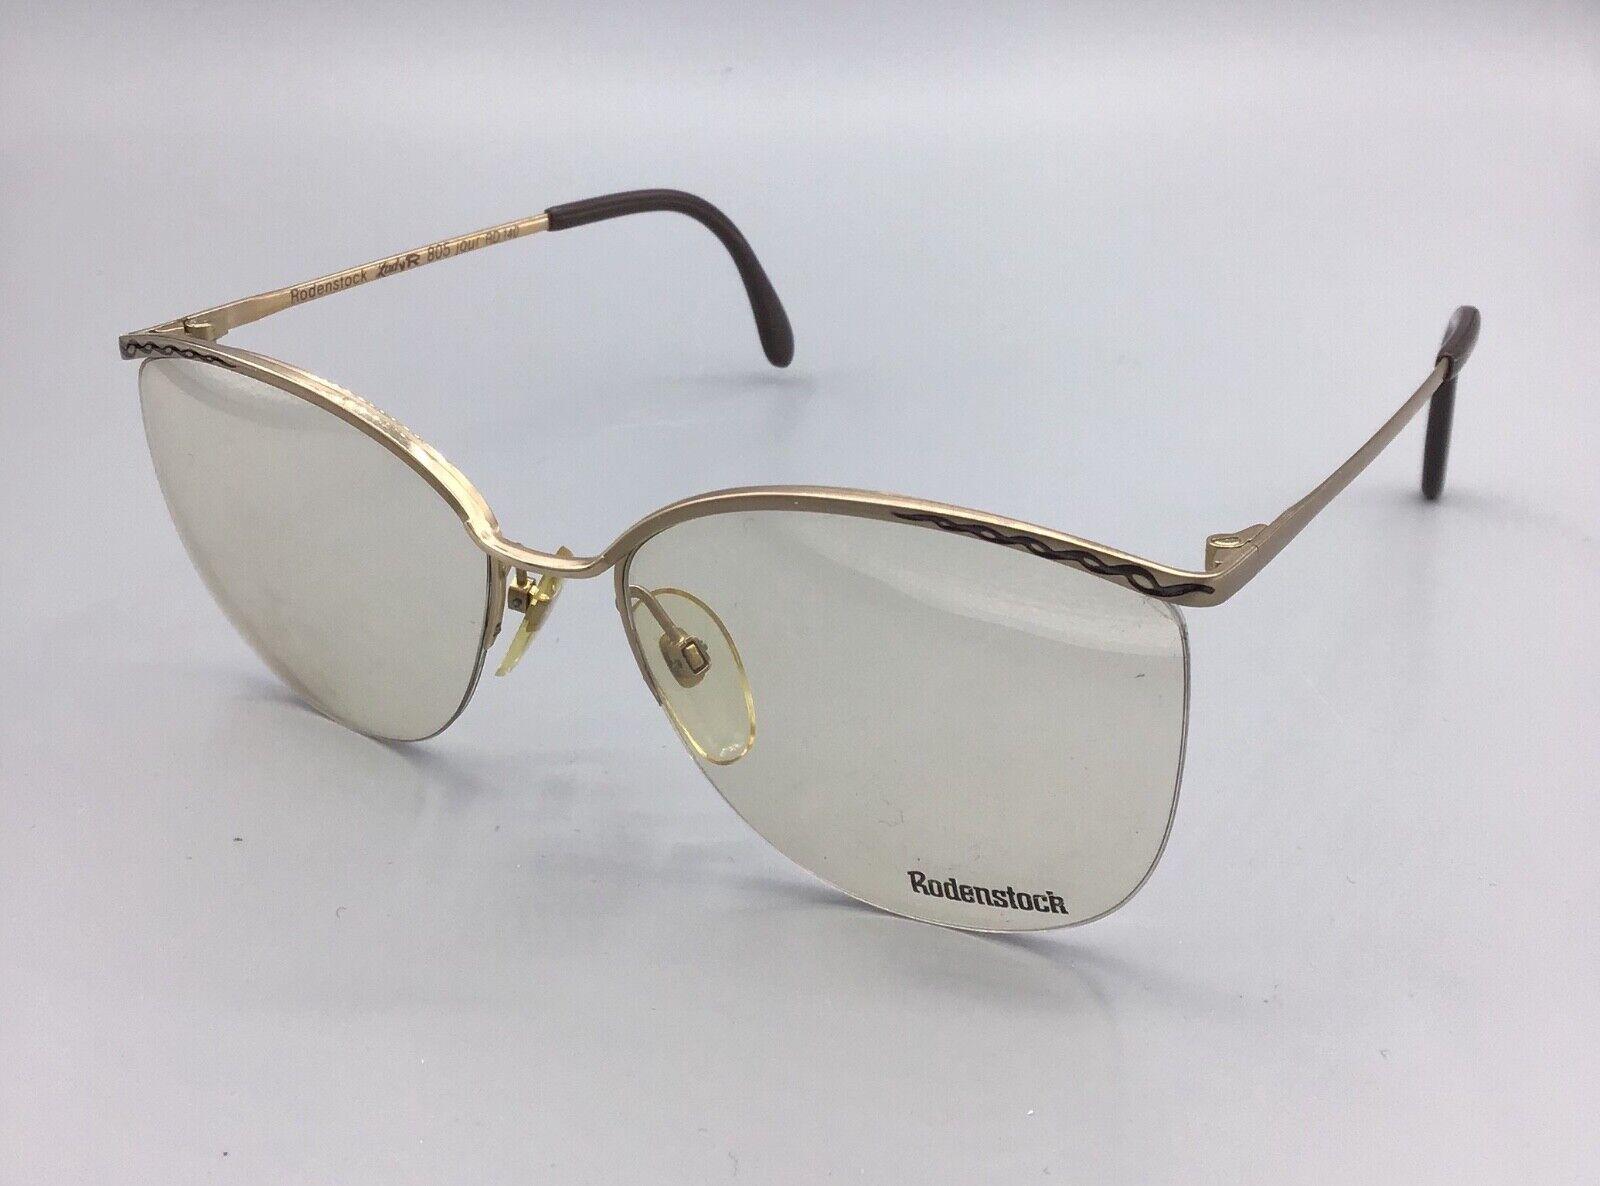 Rodenstock occhiale vintage Eyewear brillen lunettes modello Lady R 805 jour RD1/20 10k